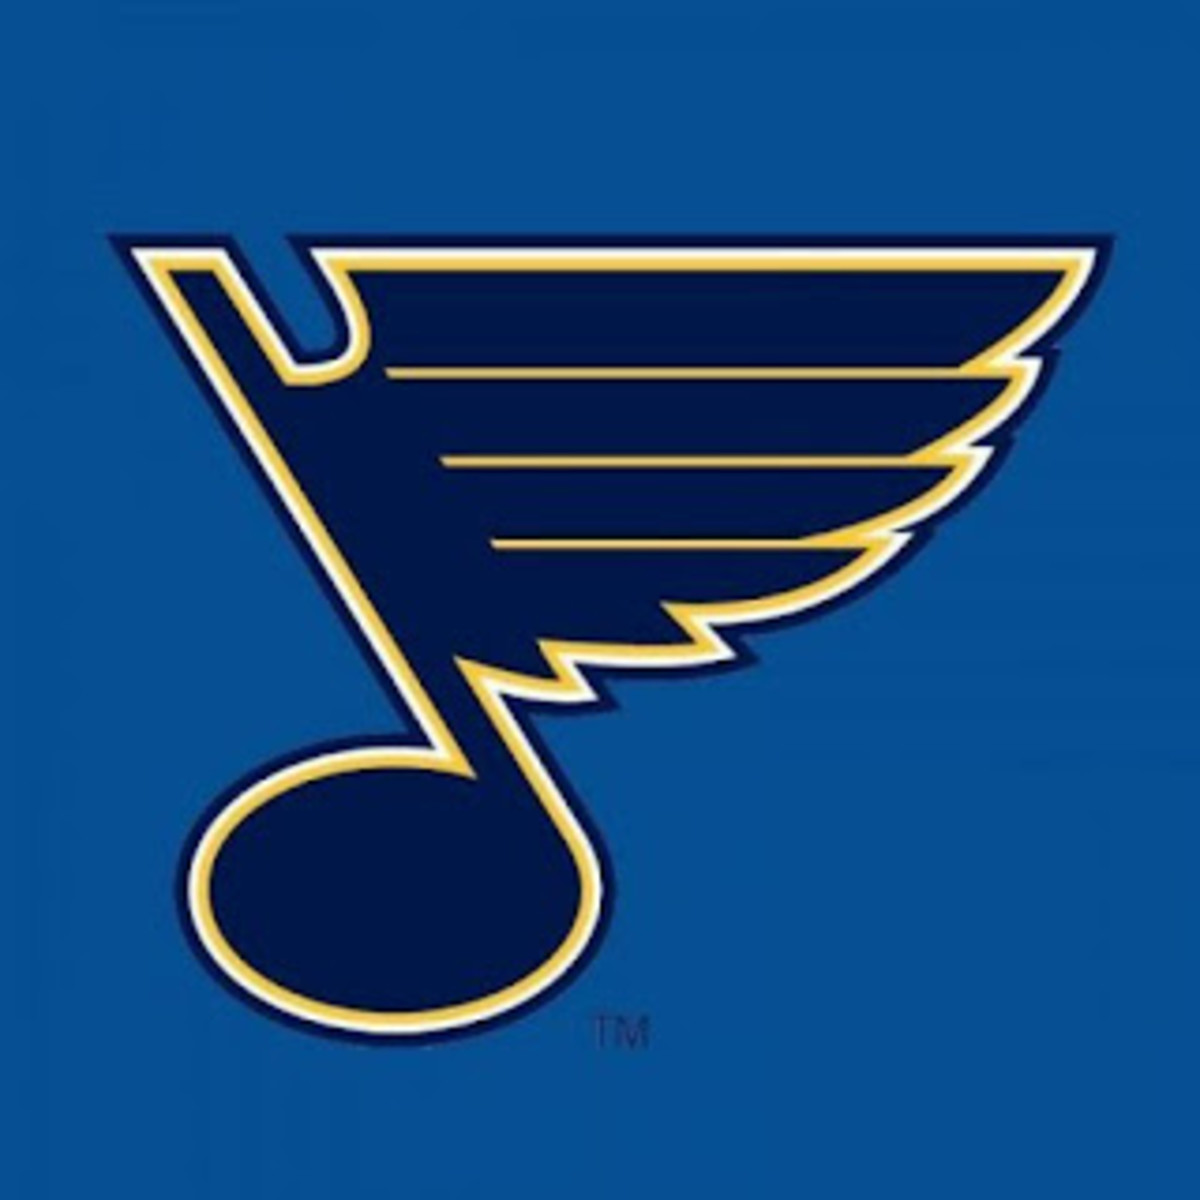 St. Louis Blues release 2023-24 schedule